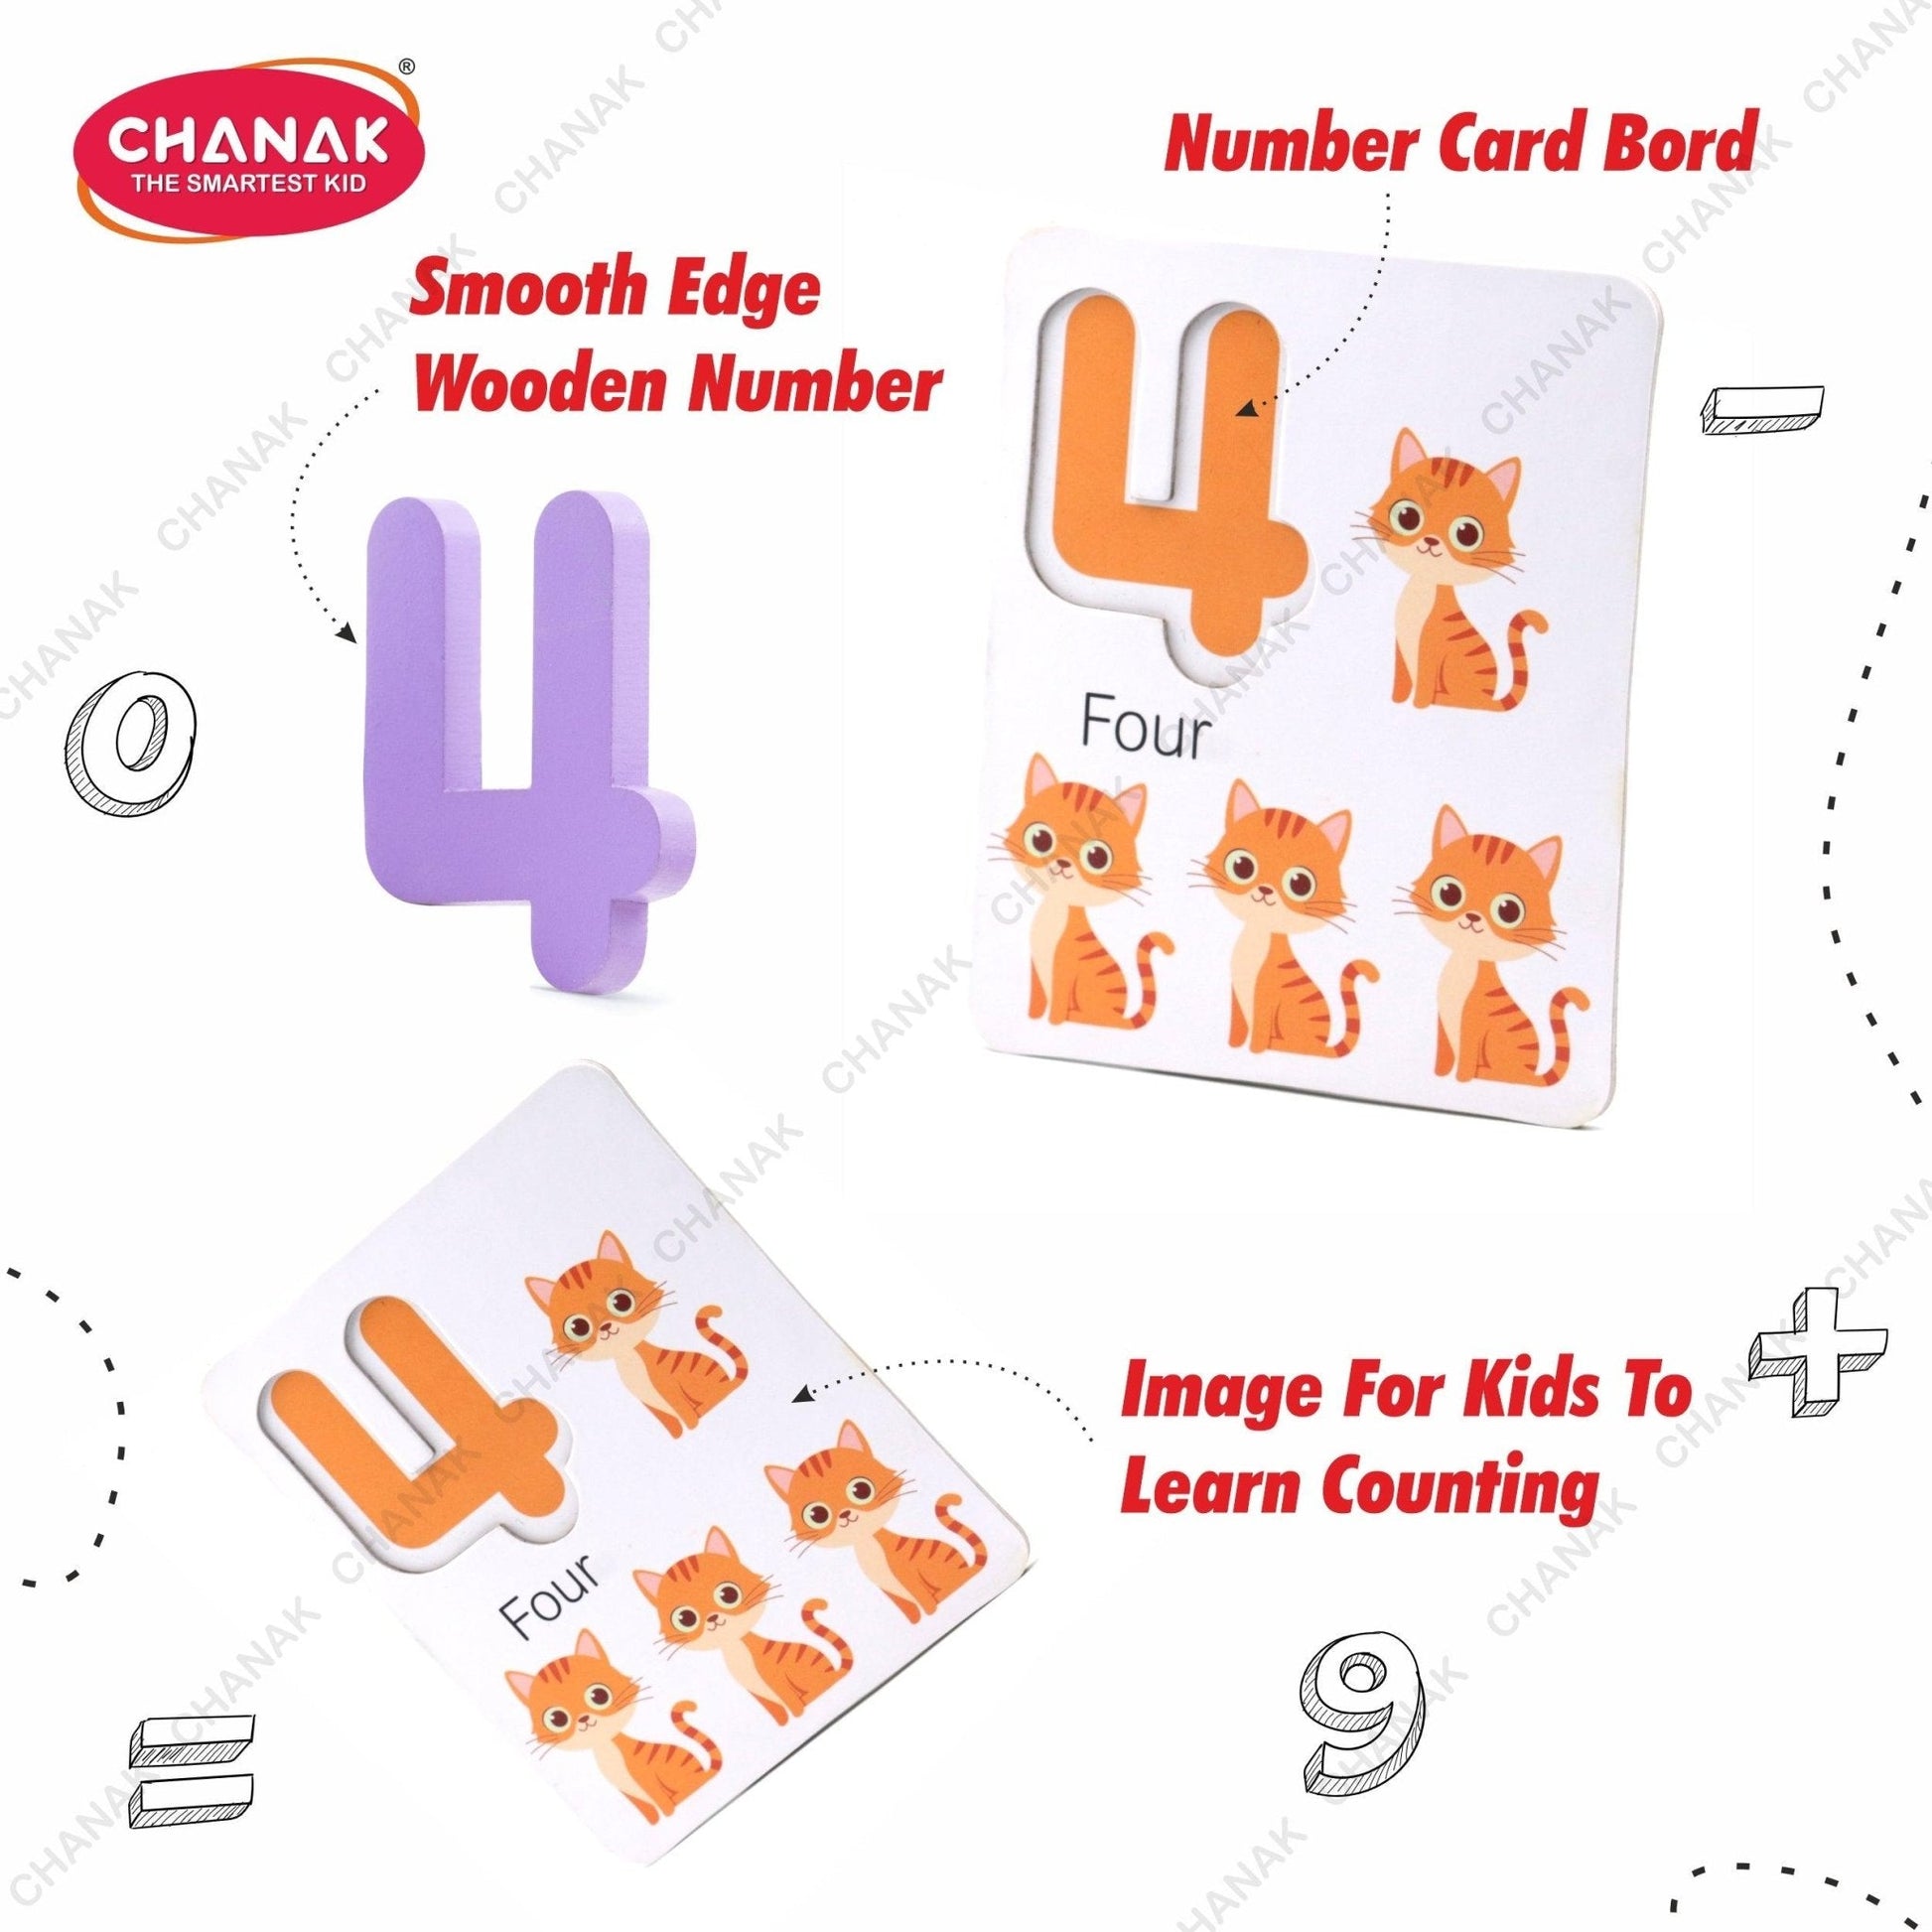 Chanak Math Genius for Kids - Educational Math Card - chanak